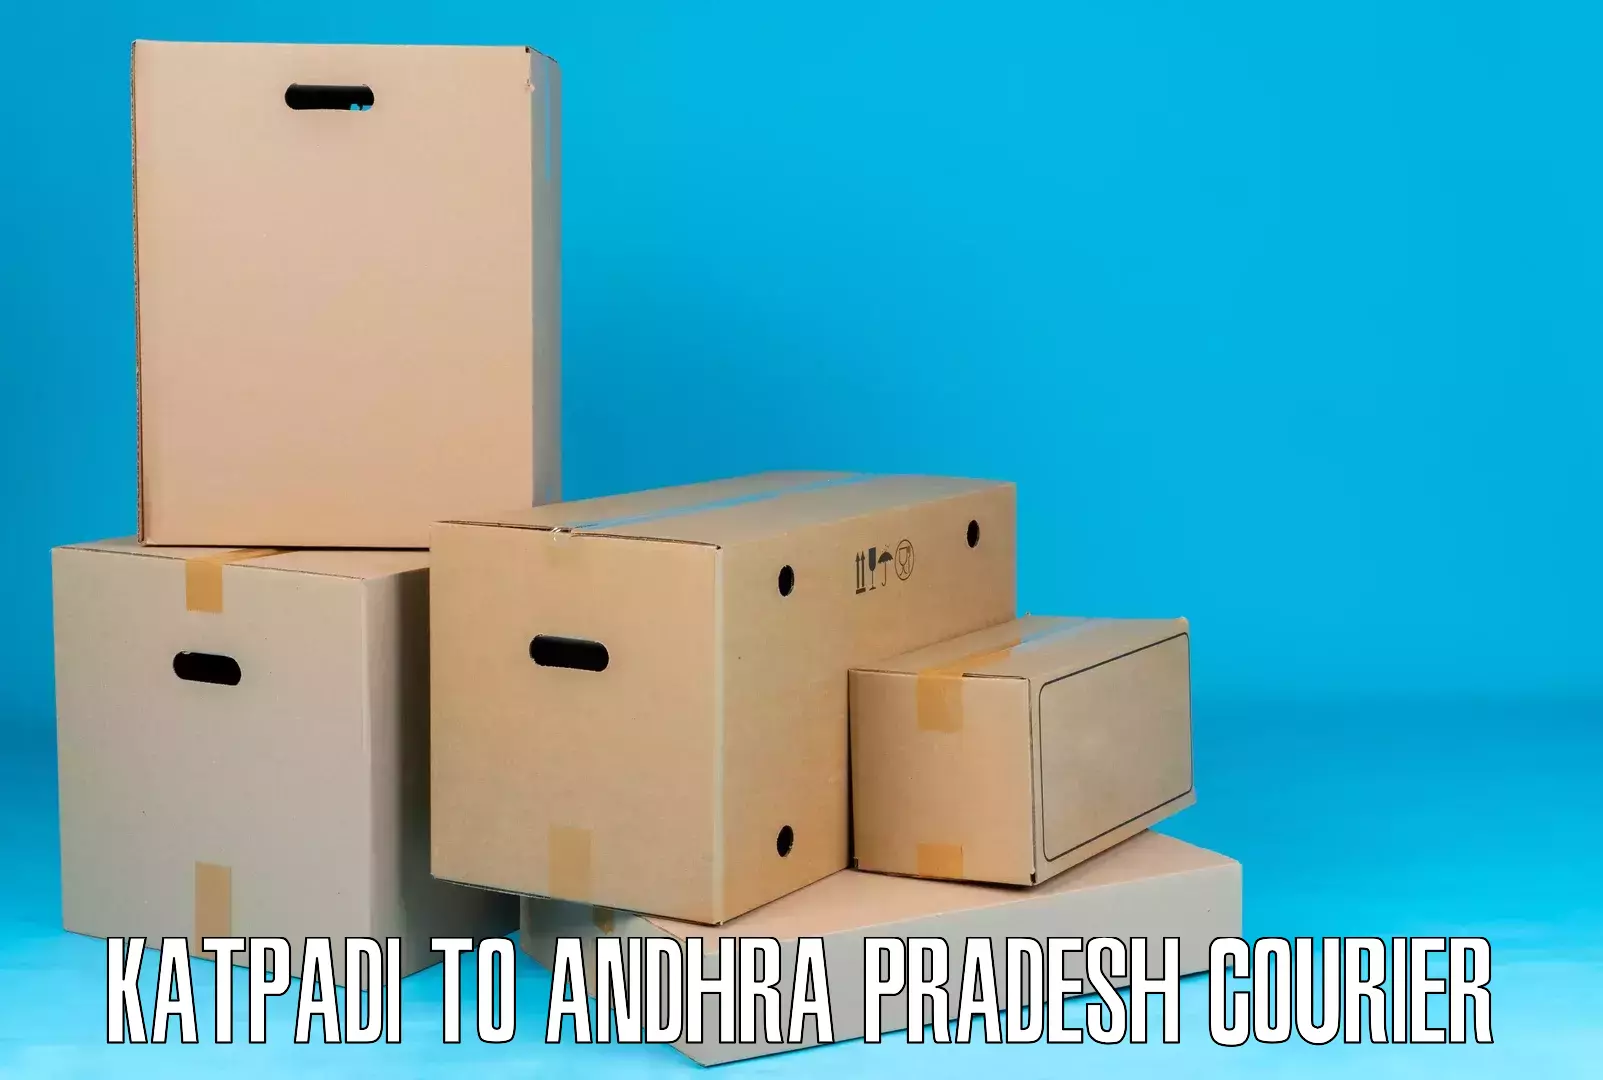 Supply chain efficiency Katpadi to Andhra Pradesh